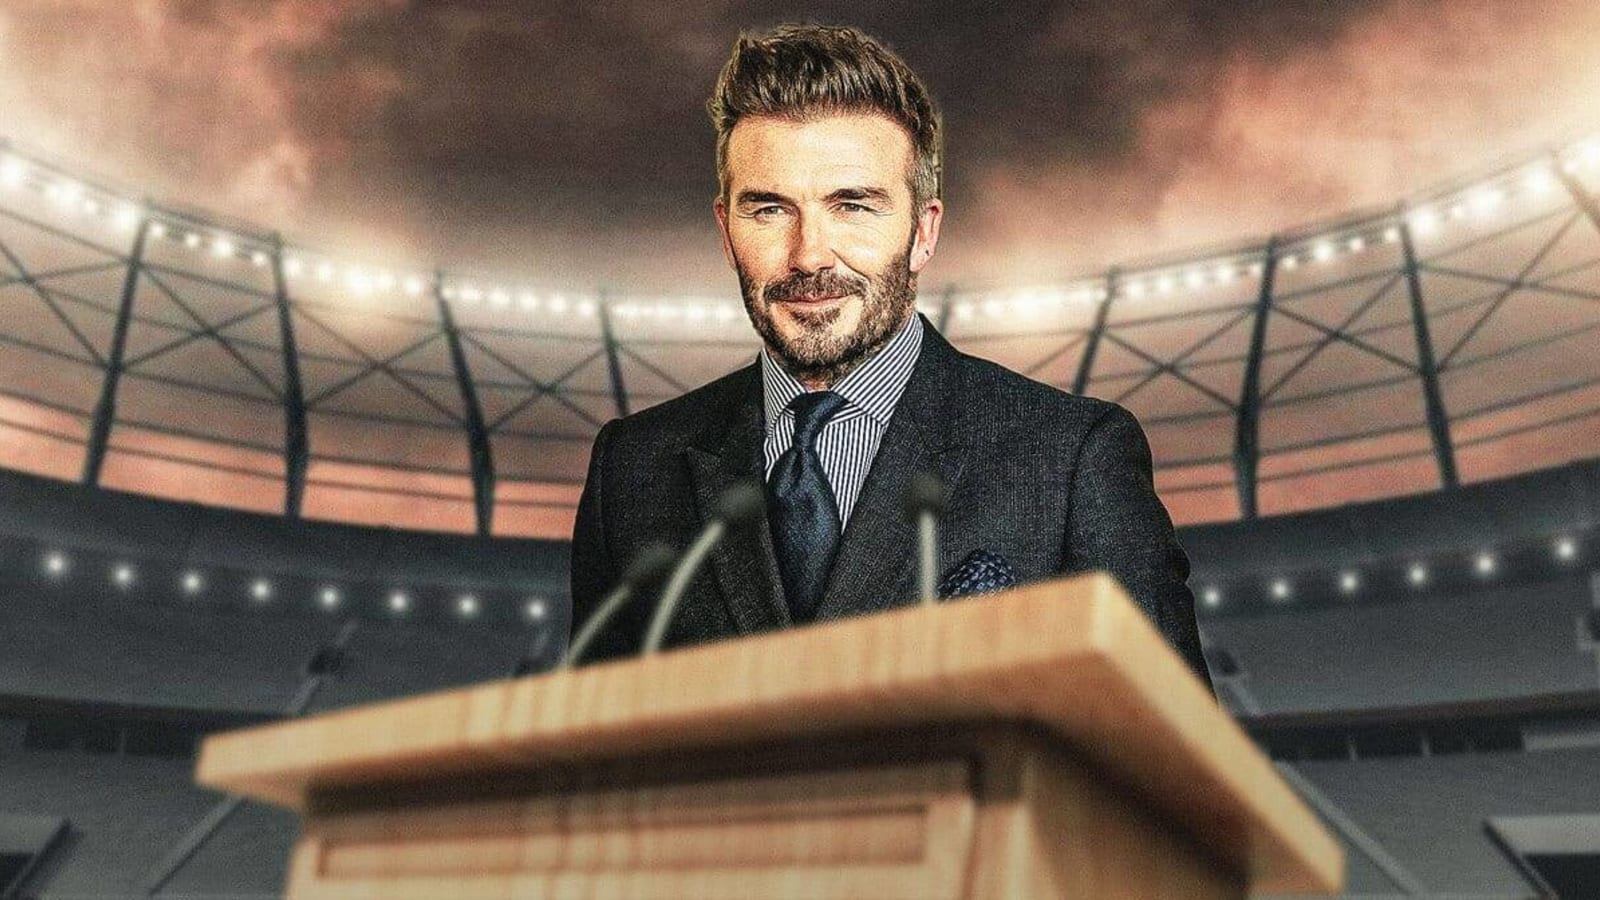 Inter Miami co-owner David Beckham sends inspiring message to Herons academy